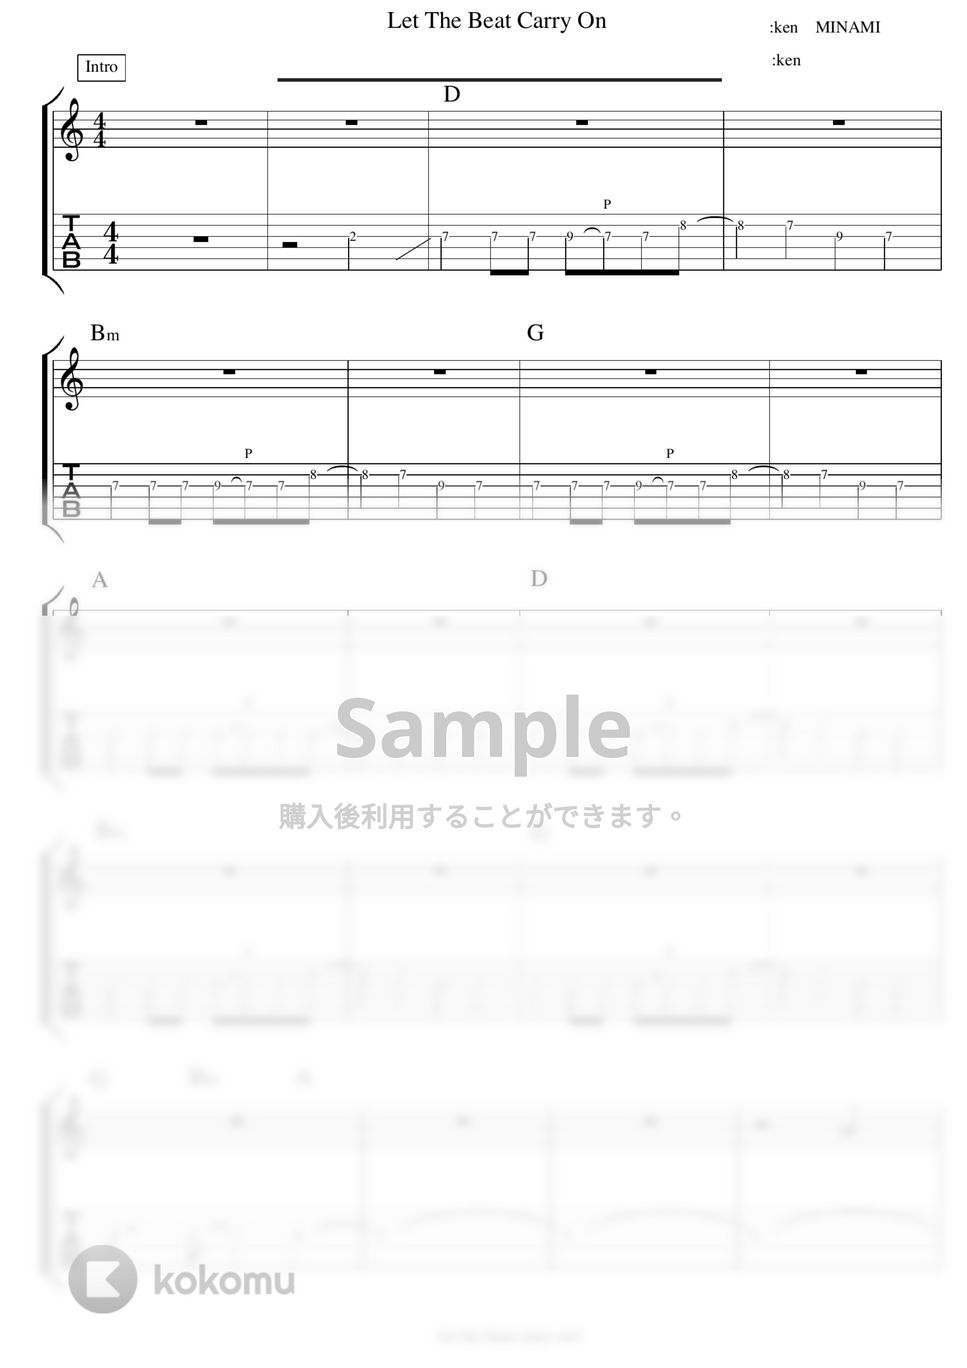 kenyokoyama - let the beat carry on ギター演奏動画付TAB譜 by バイトーン音楽教室